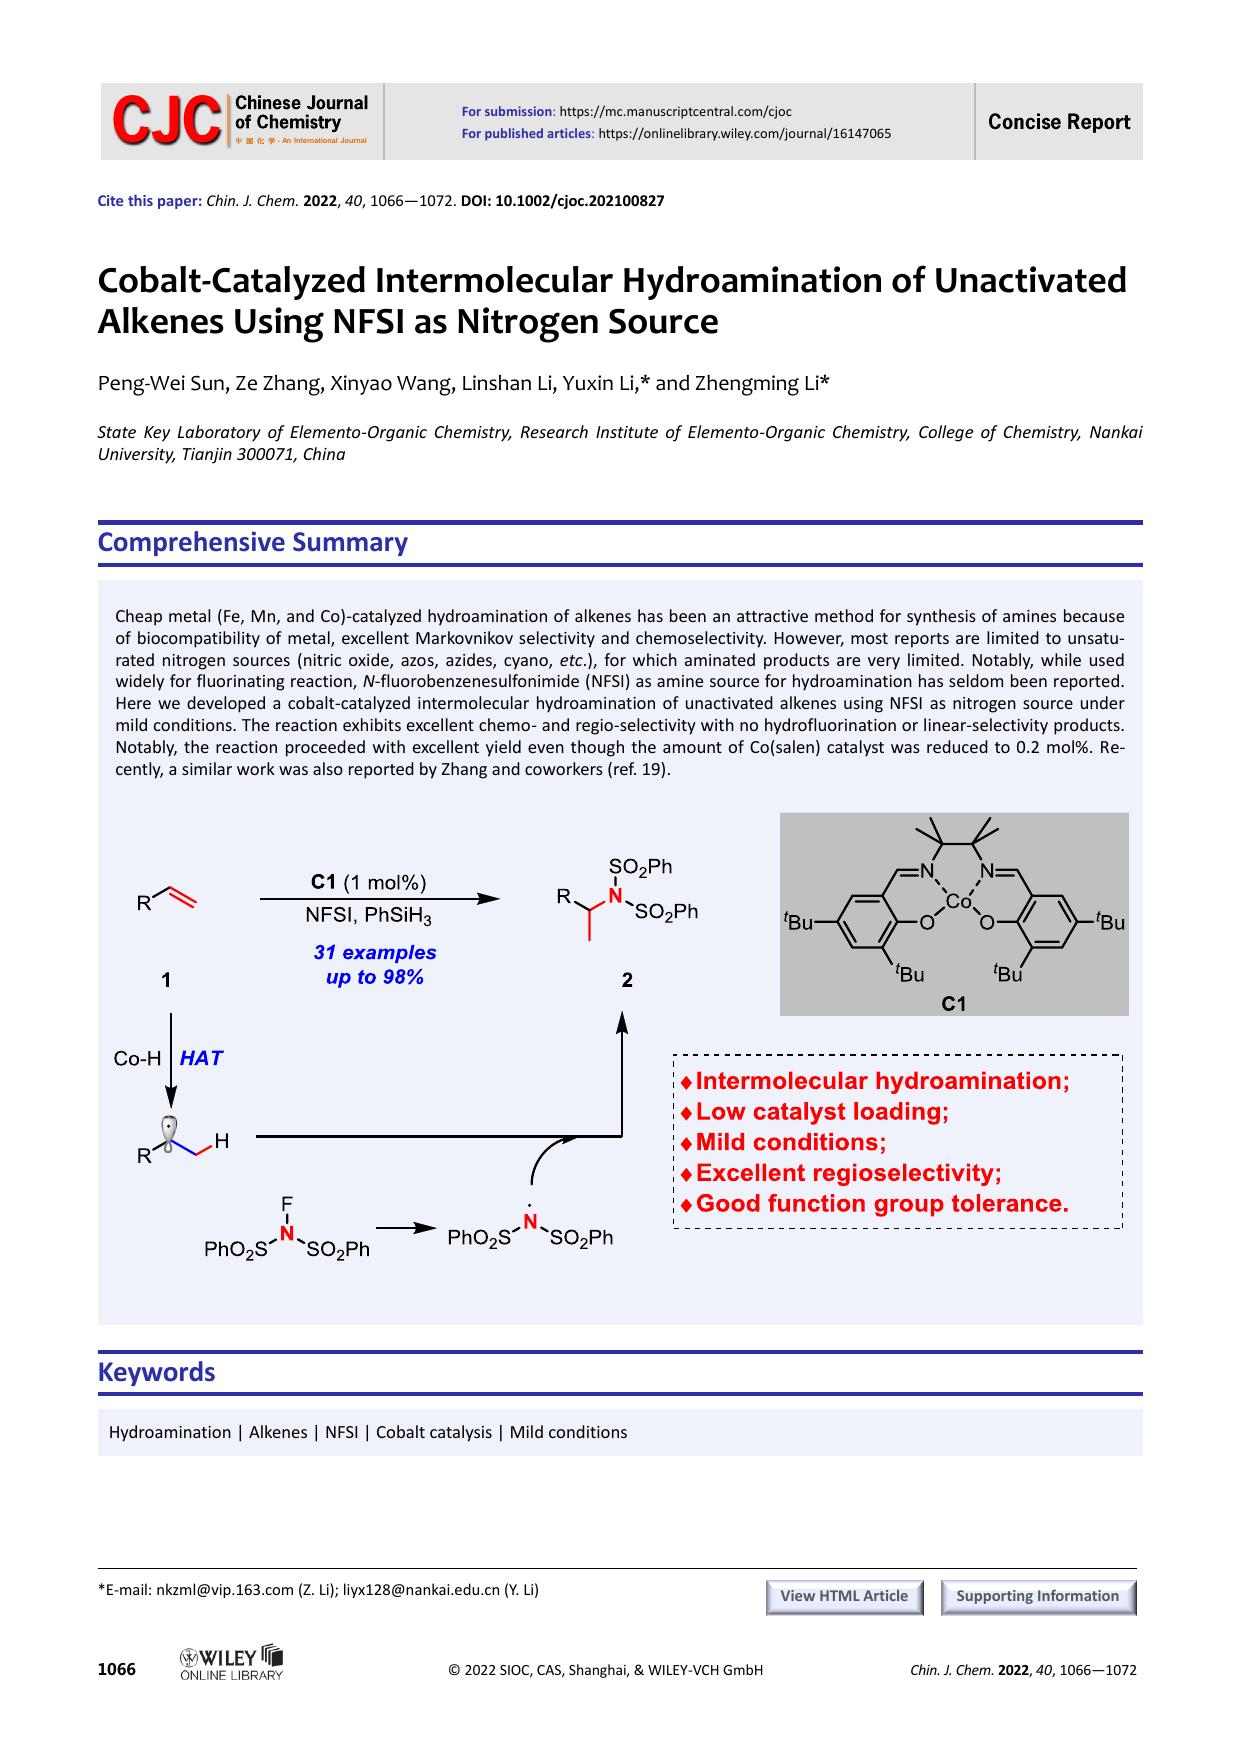 Cobalt-catalyzed Intermolecular Hydroamination of Unactivated Alkenes Using NFSI as Nitrogen Source by Administrator